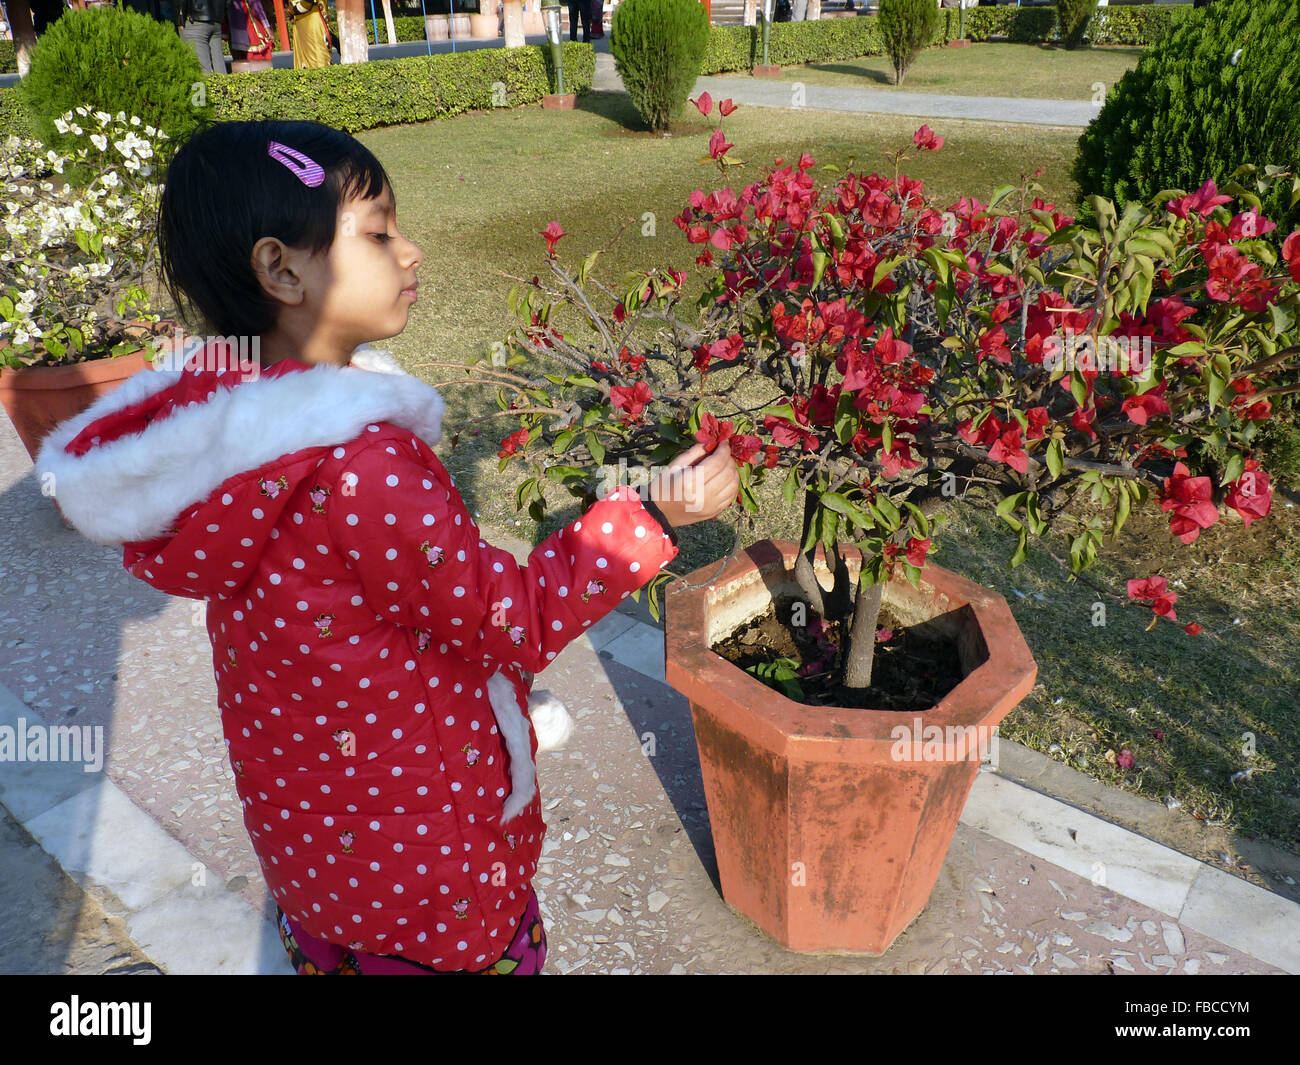 Cute Little Girl Plucking Flowers in a Garden Stock Photo